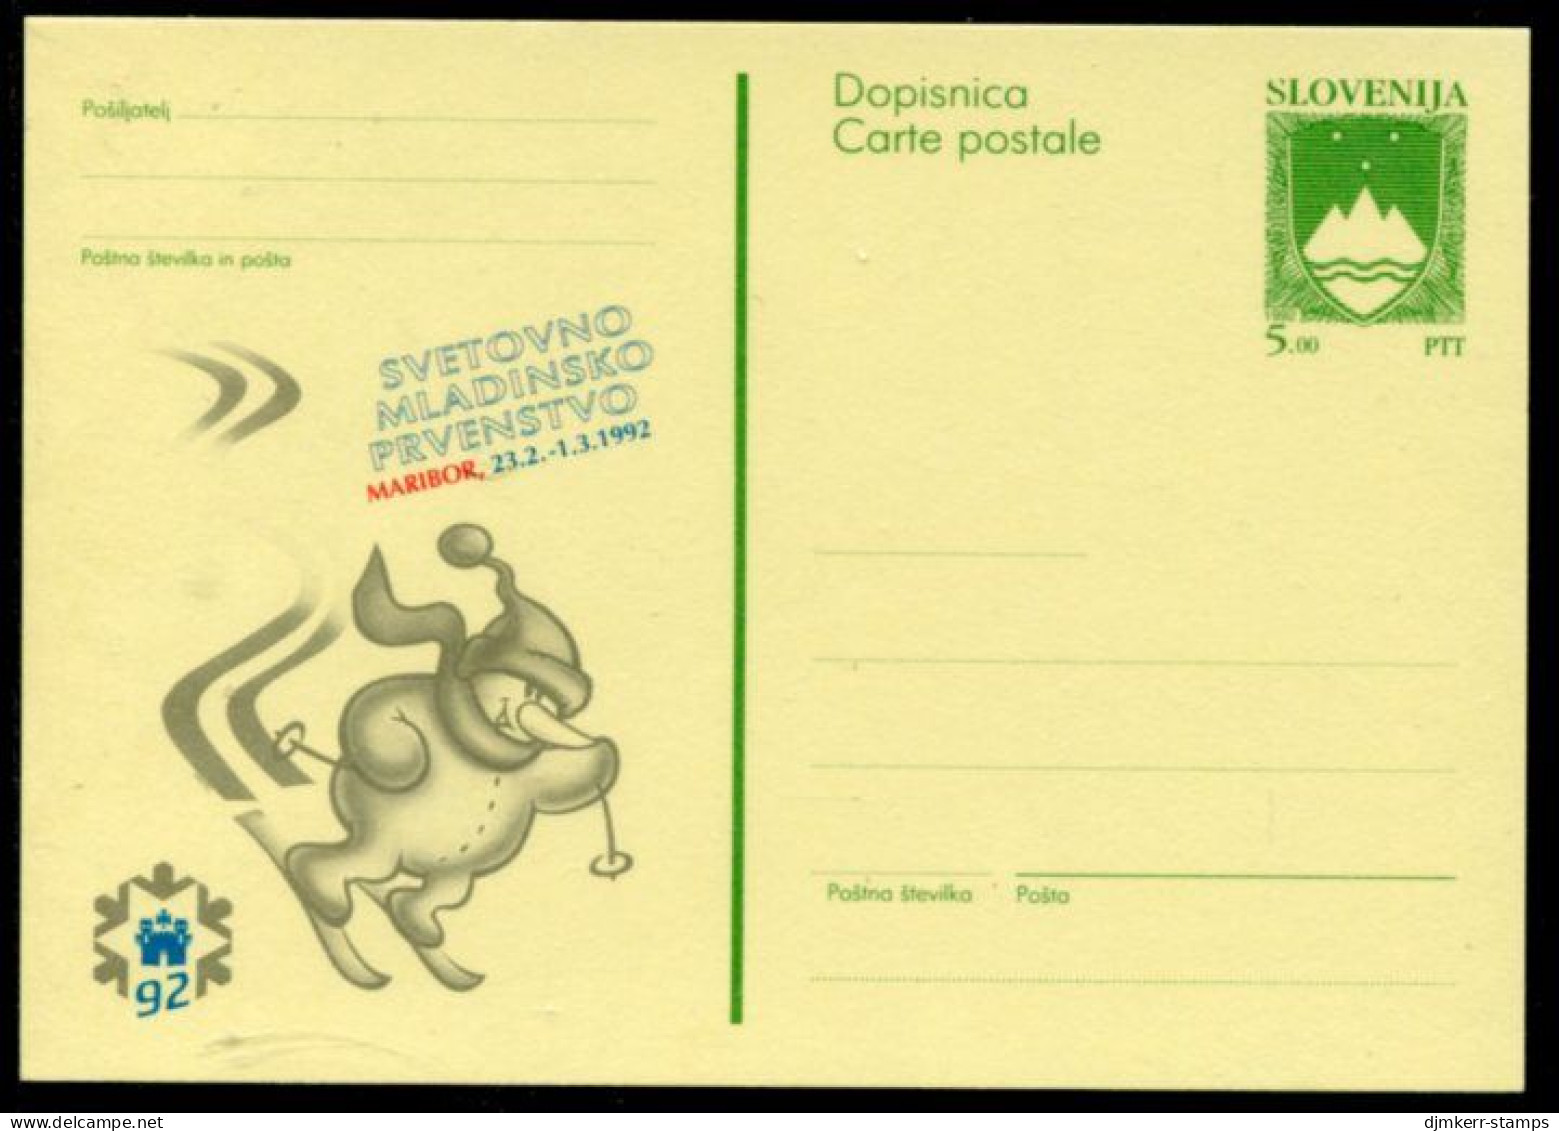 SLOVENIA 1992 5.00 T.  Junior Ski  World Championships Stationery Card, Unused.   Michel P2 - Eslovenia